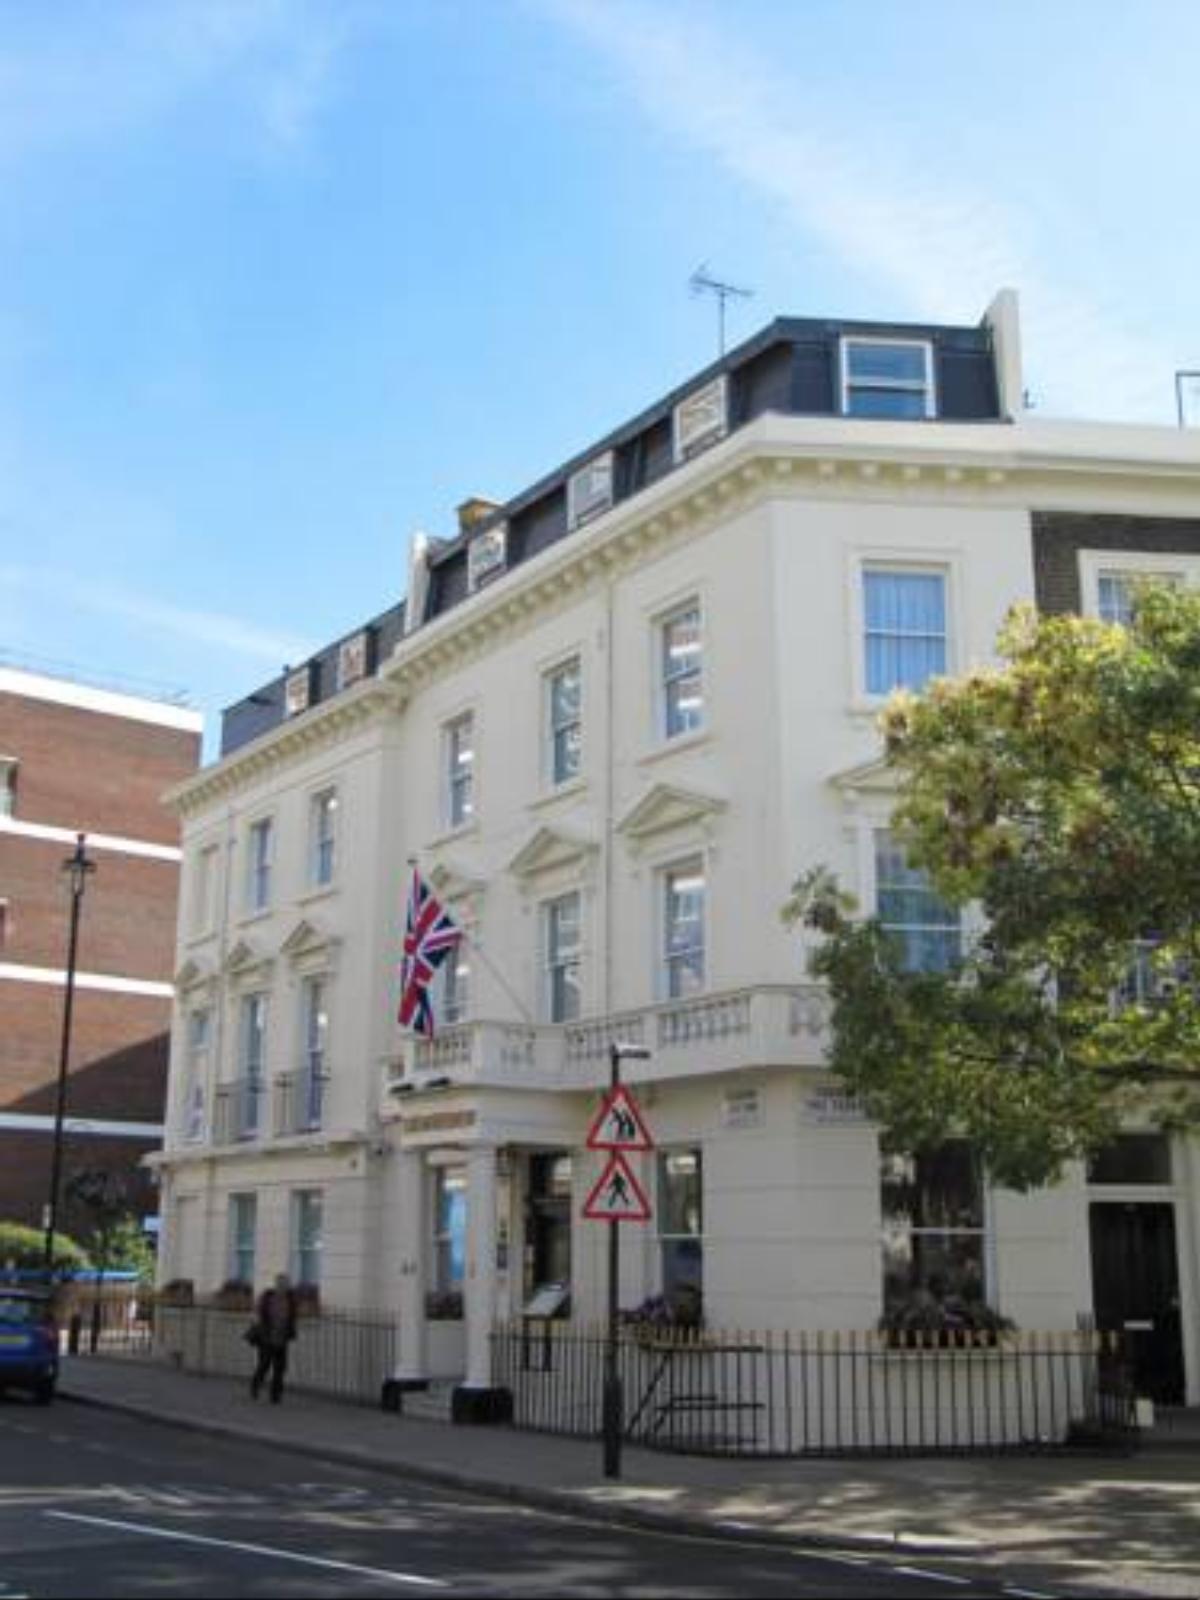 Windermere Hotel Hotel London United Kingdom